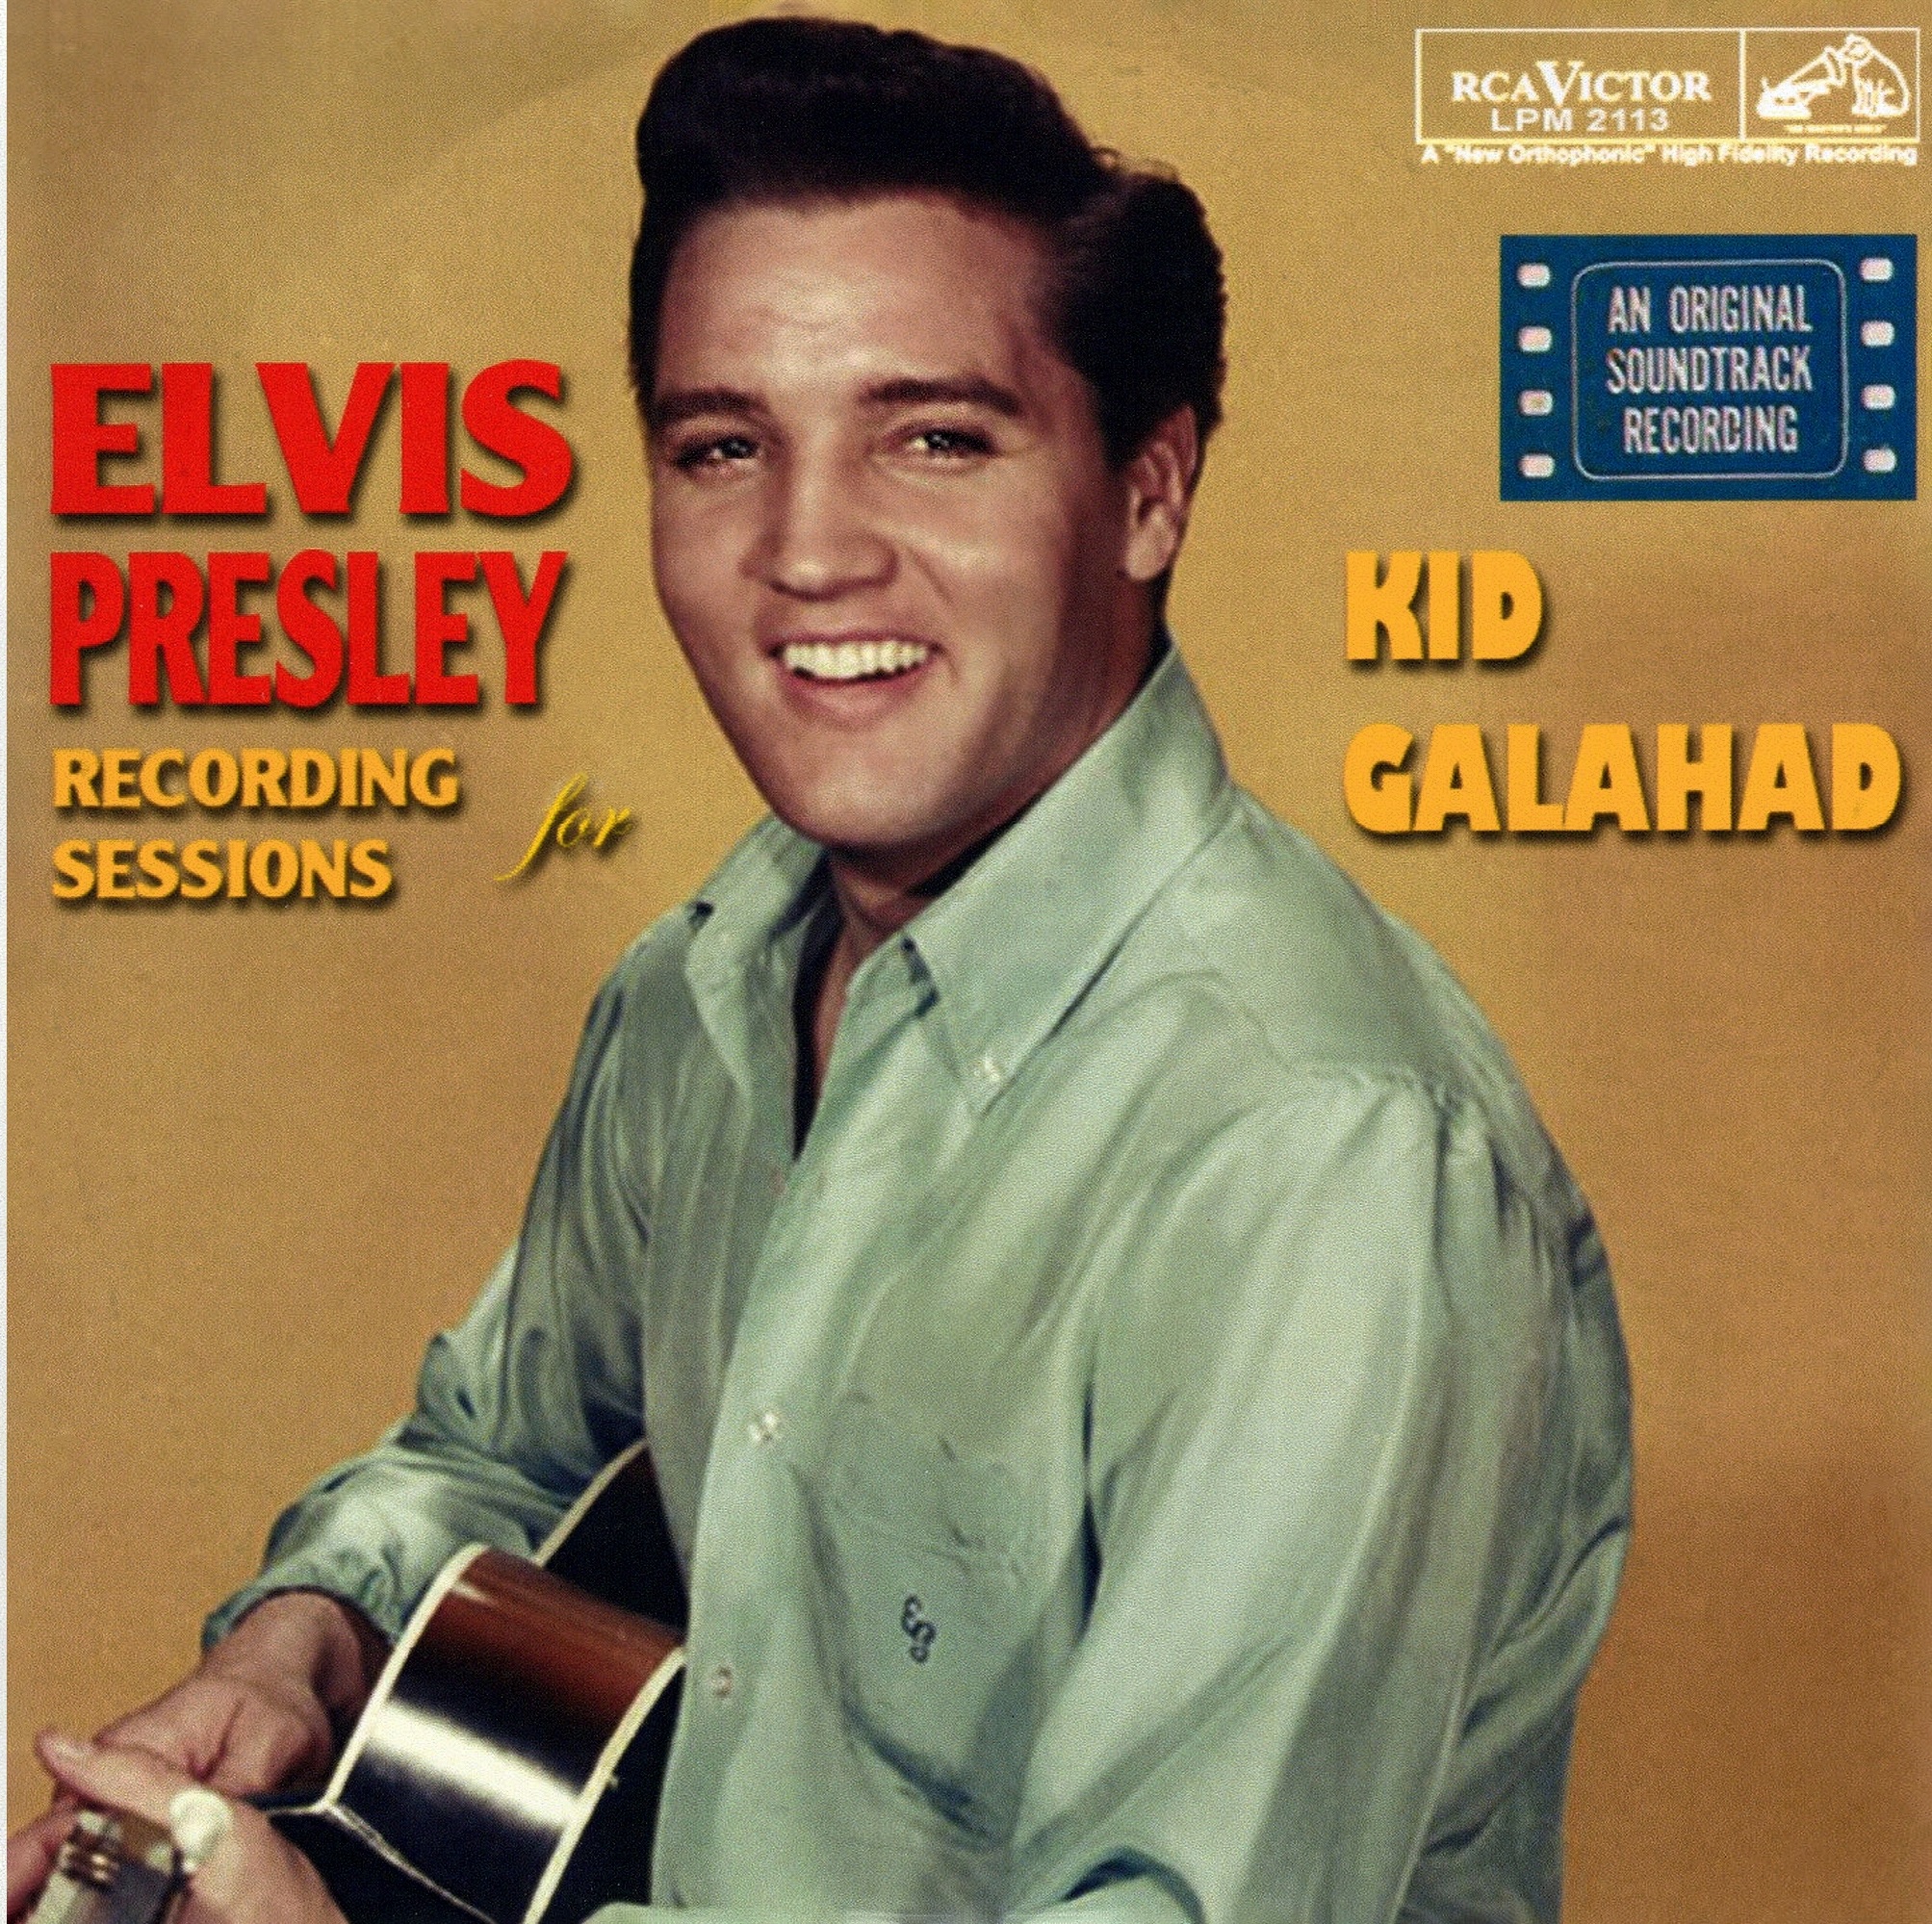 Elvis Presley - Recording Sessions For Kid Galahad [CMT Star LPM2113]